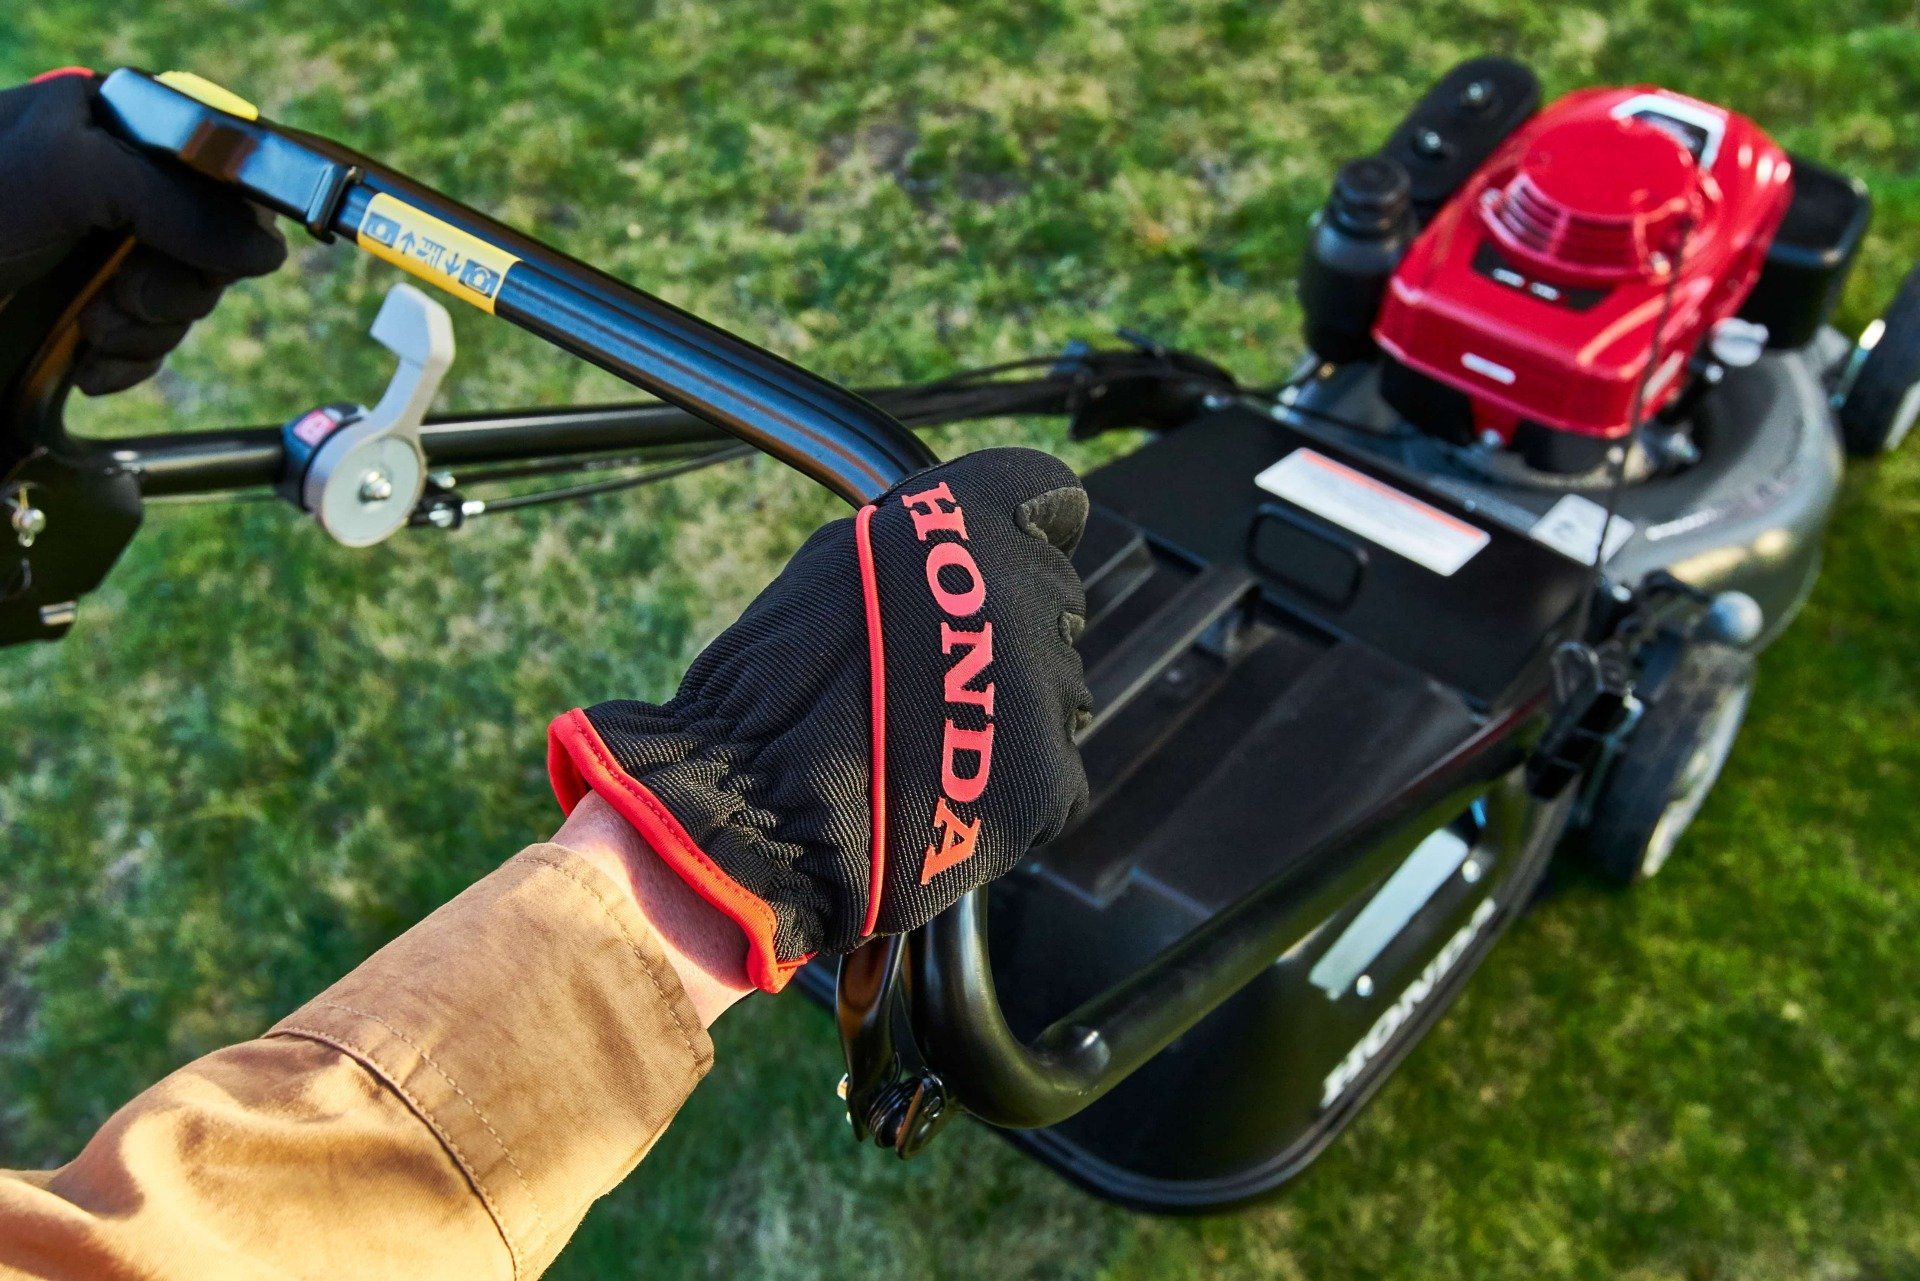 Honda Lawn Mower — Garden Equipment in Raymond Terrace, NSW